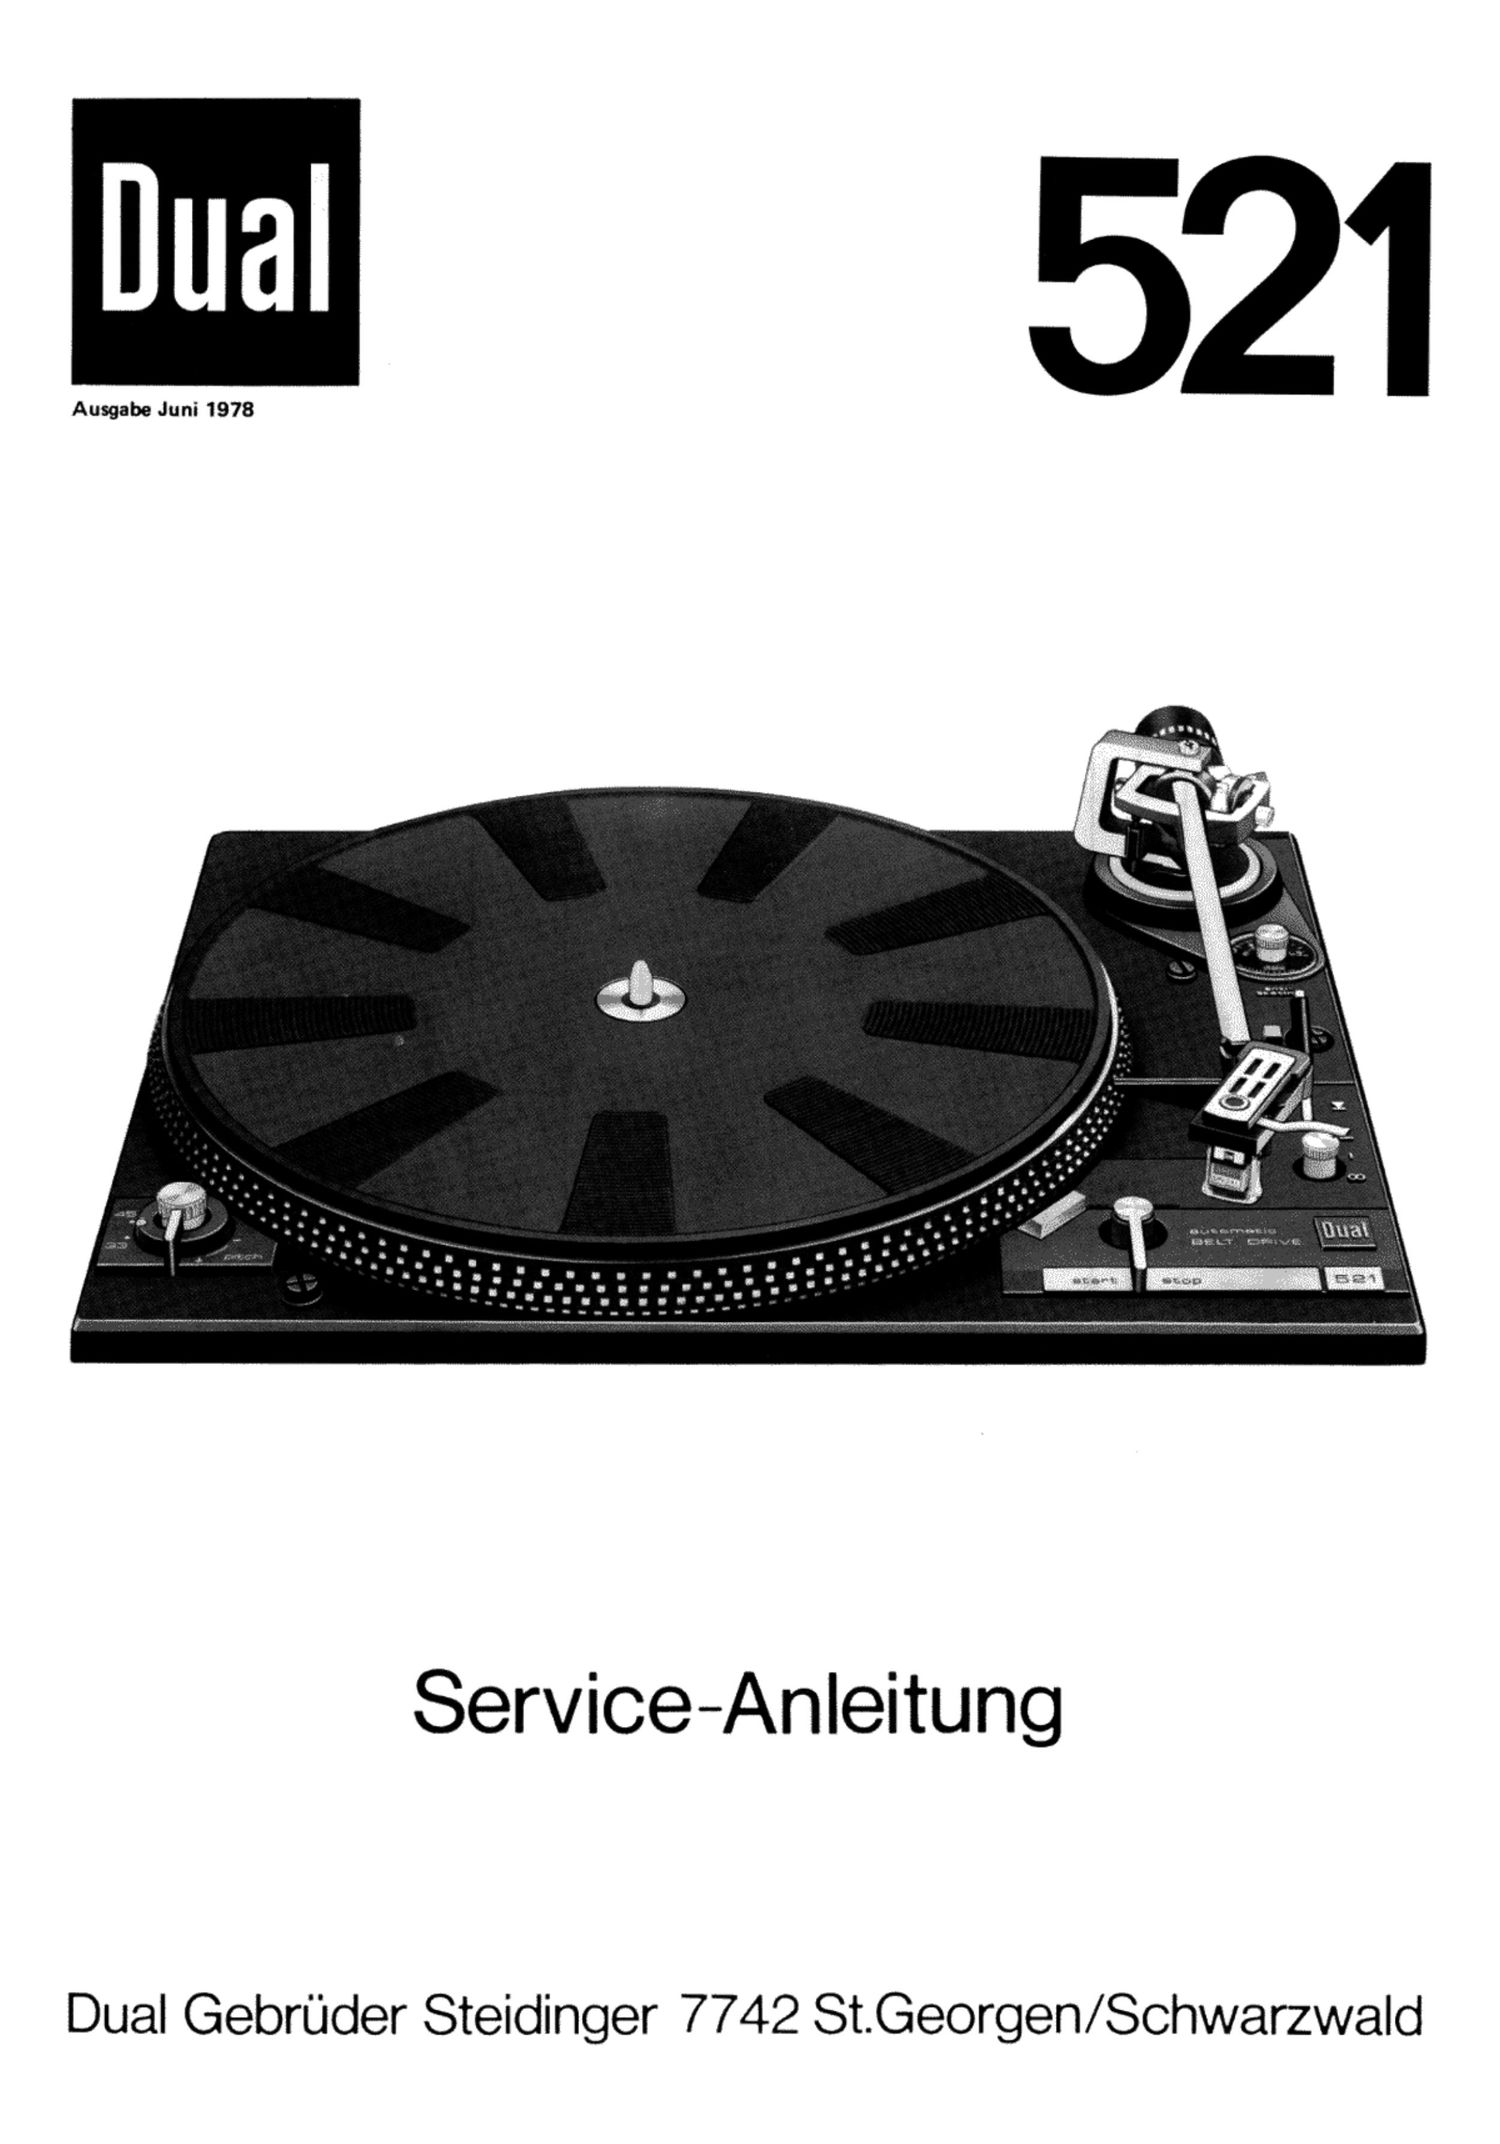 Dual 521 Service Manual